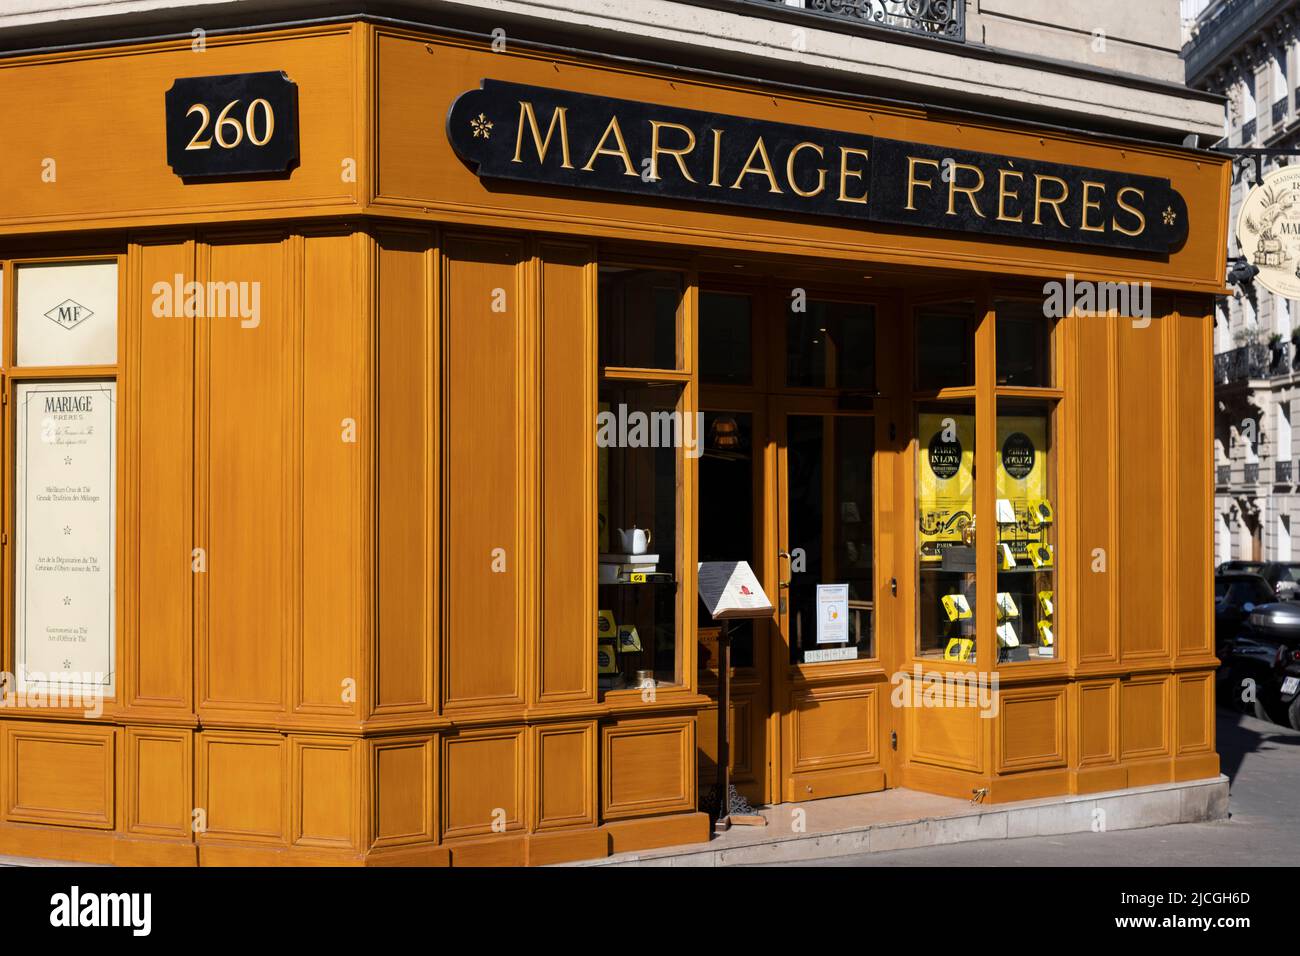 Mariage Freres tea room and shop, Paris, France Stock Photo